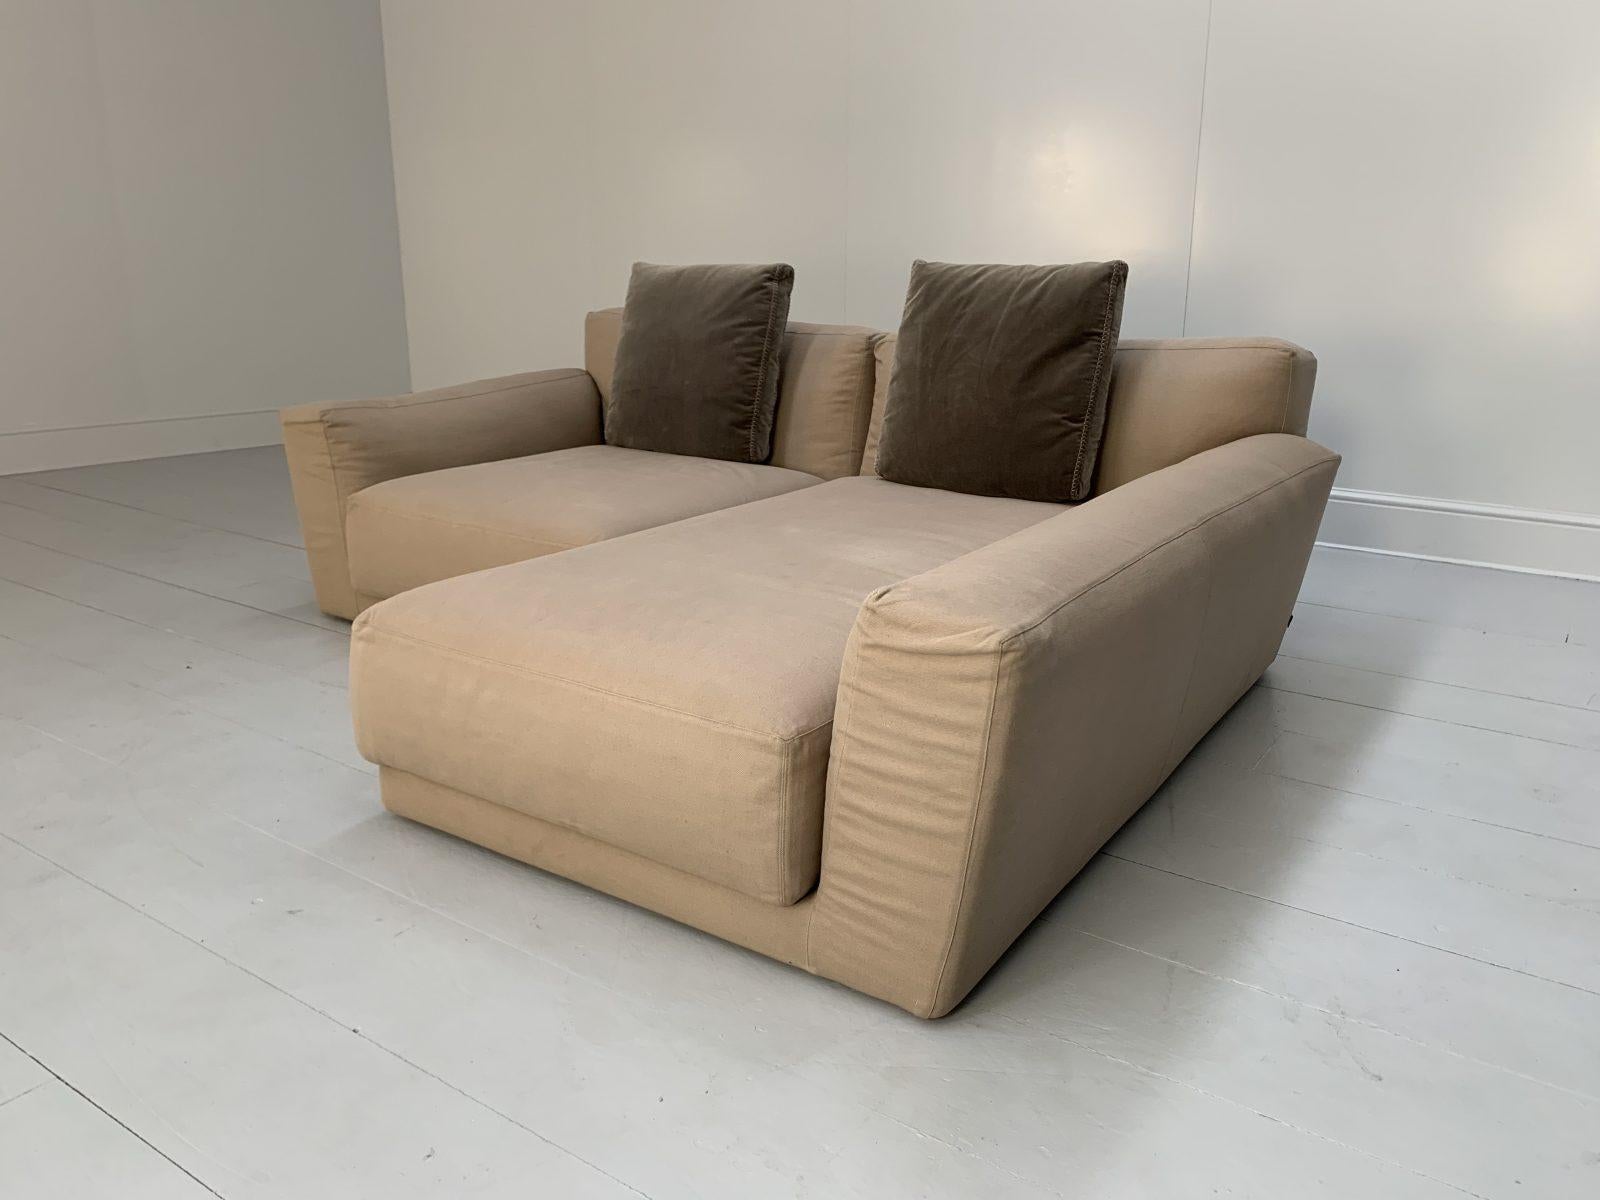 B&B Italia “Luis” 3-Seat Compact L-Shape Sofa – In “Ellade” Linen In Good Condition For Sale In Barrowford, GB